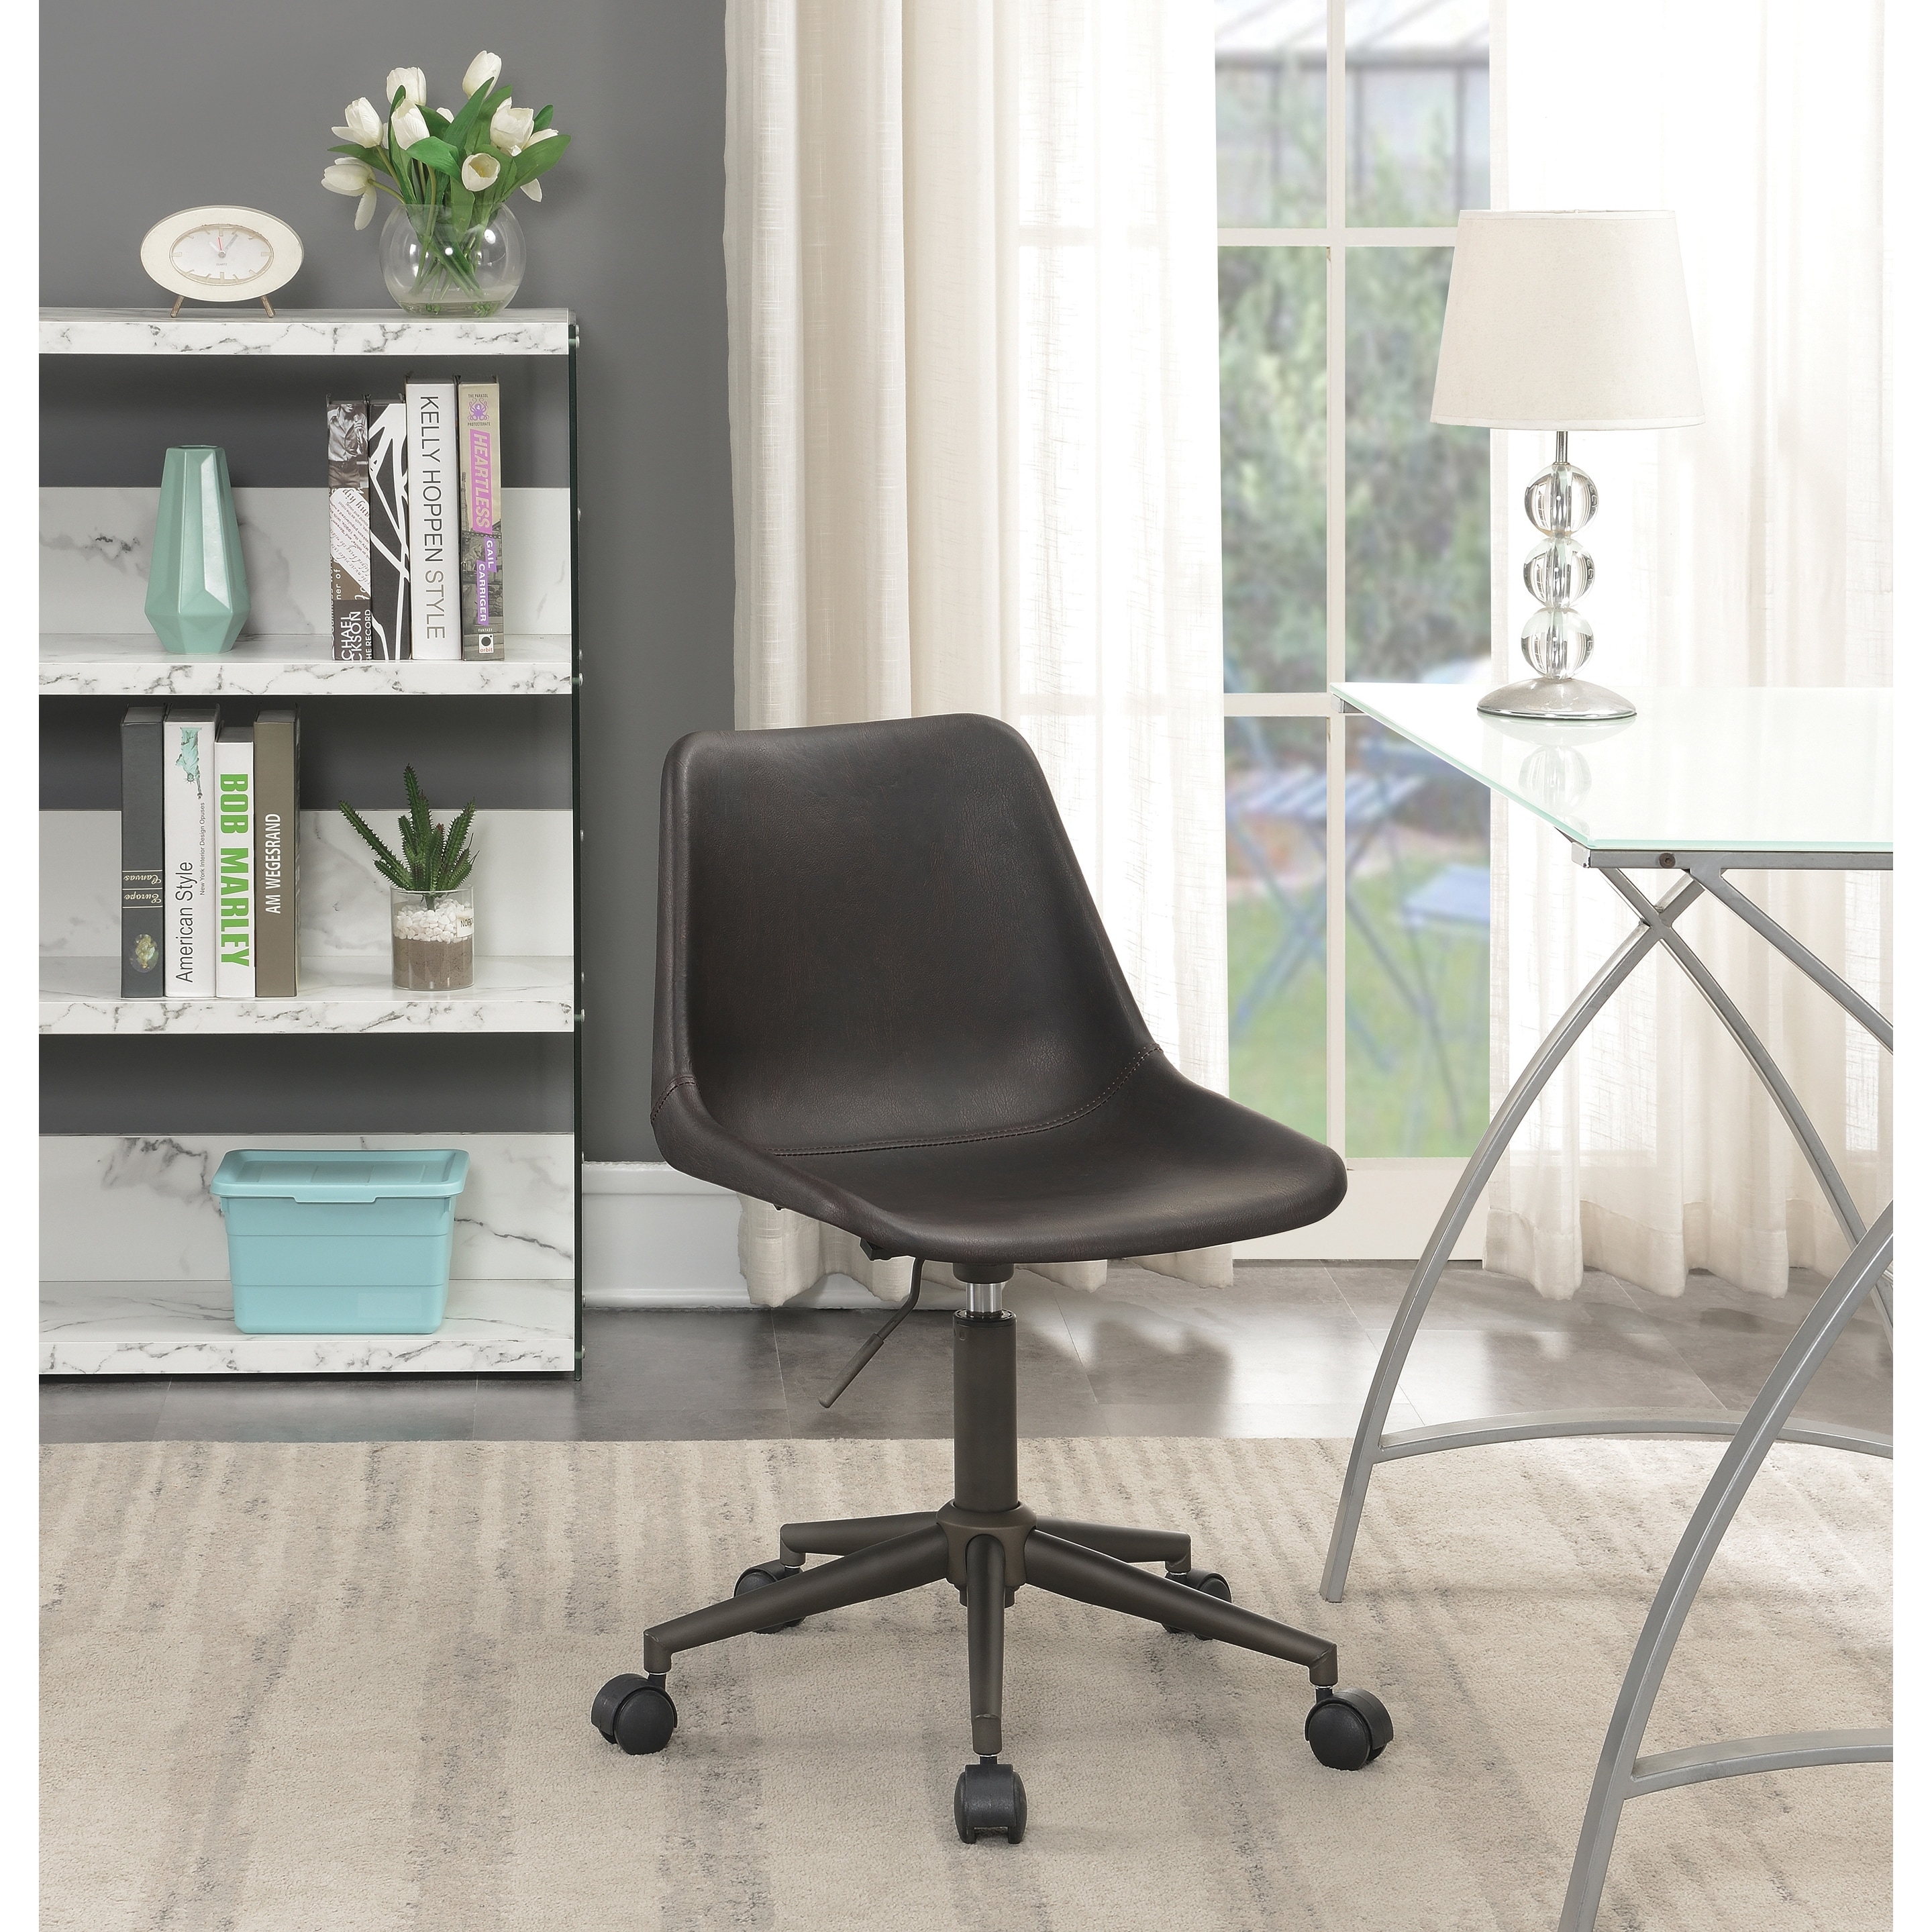 CDecor Ralston Bronze Adjustable Desk Chairs